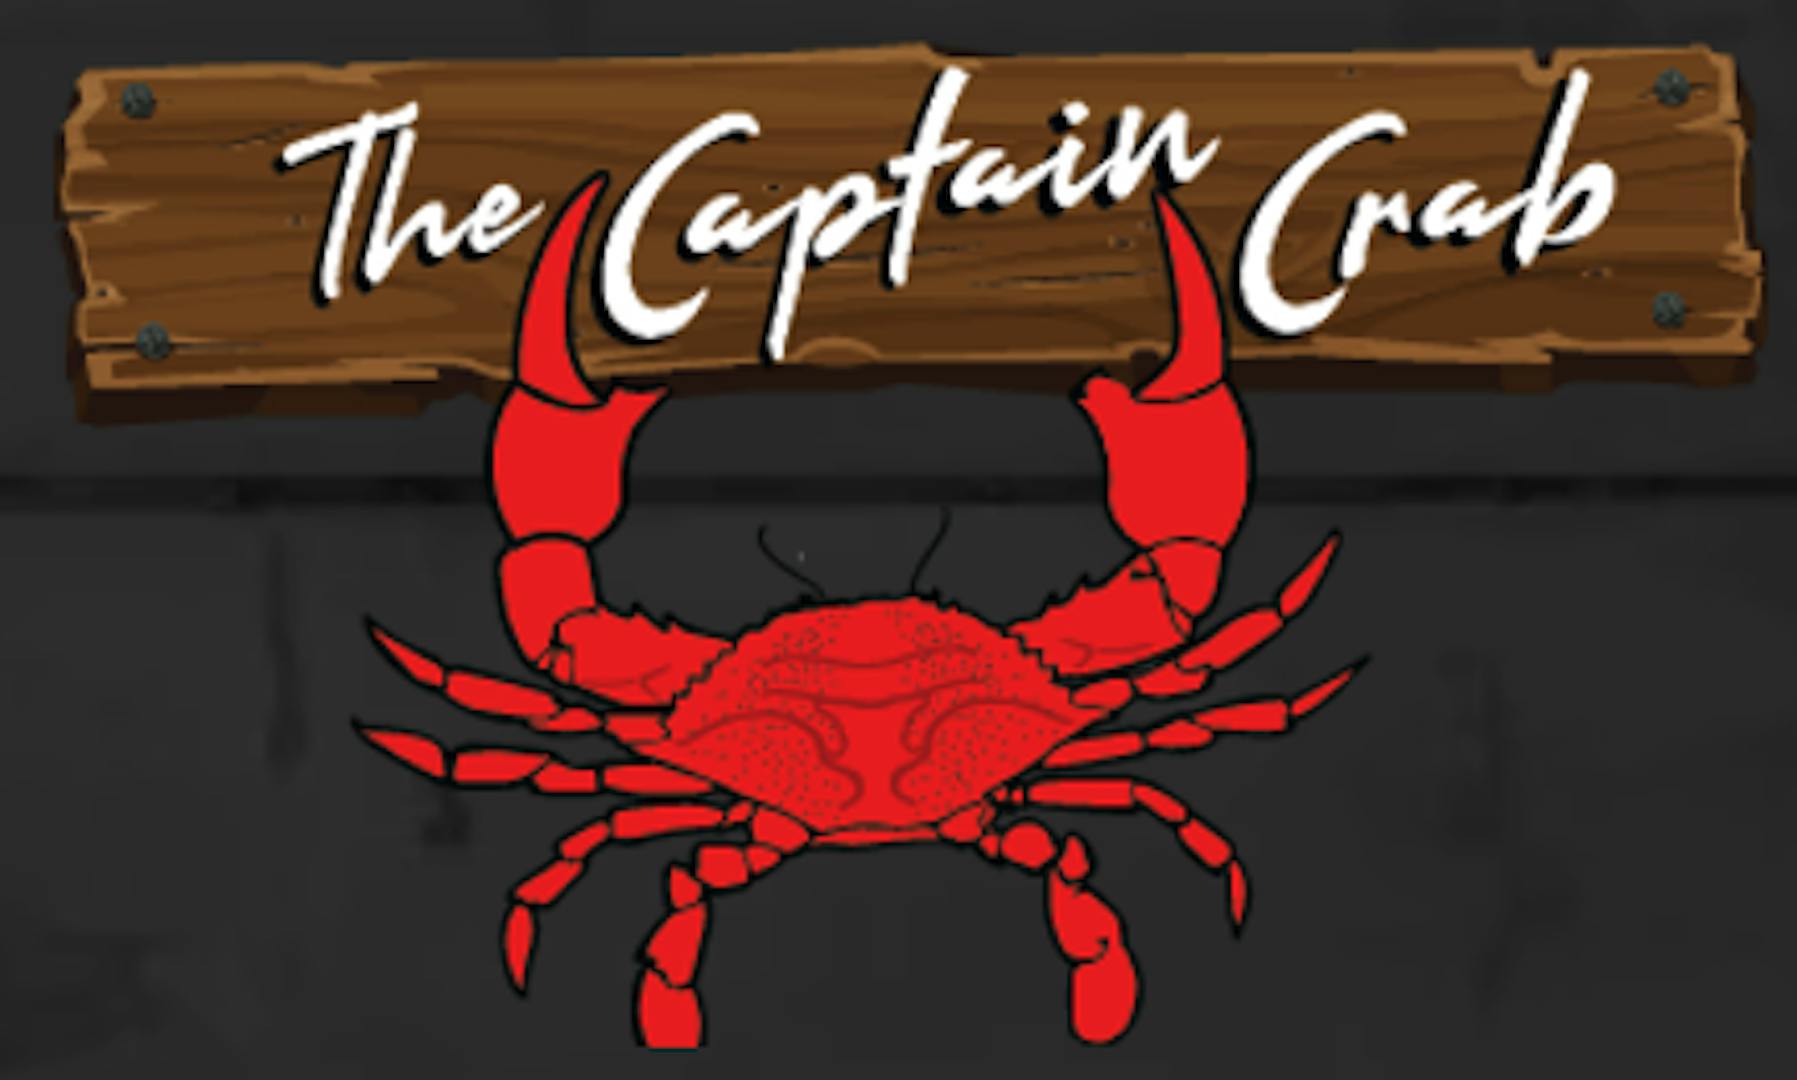 The Captain Crab